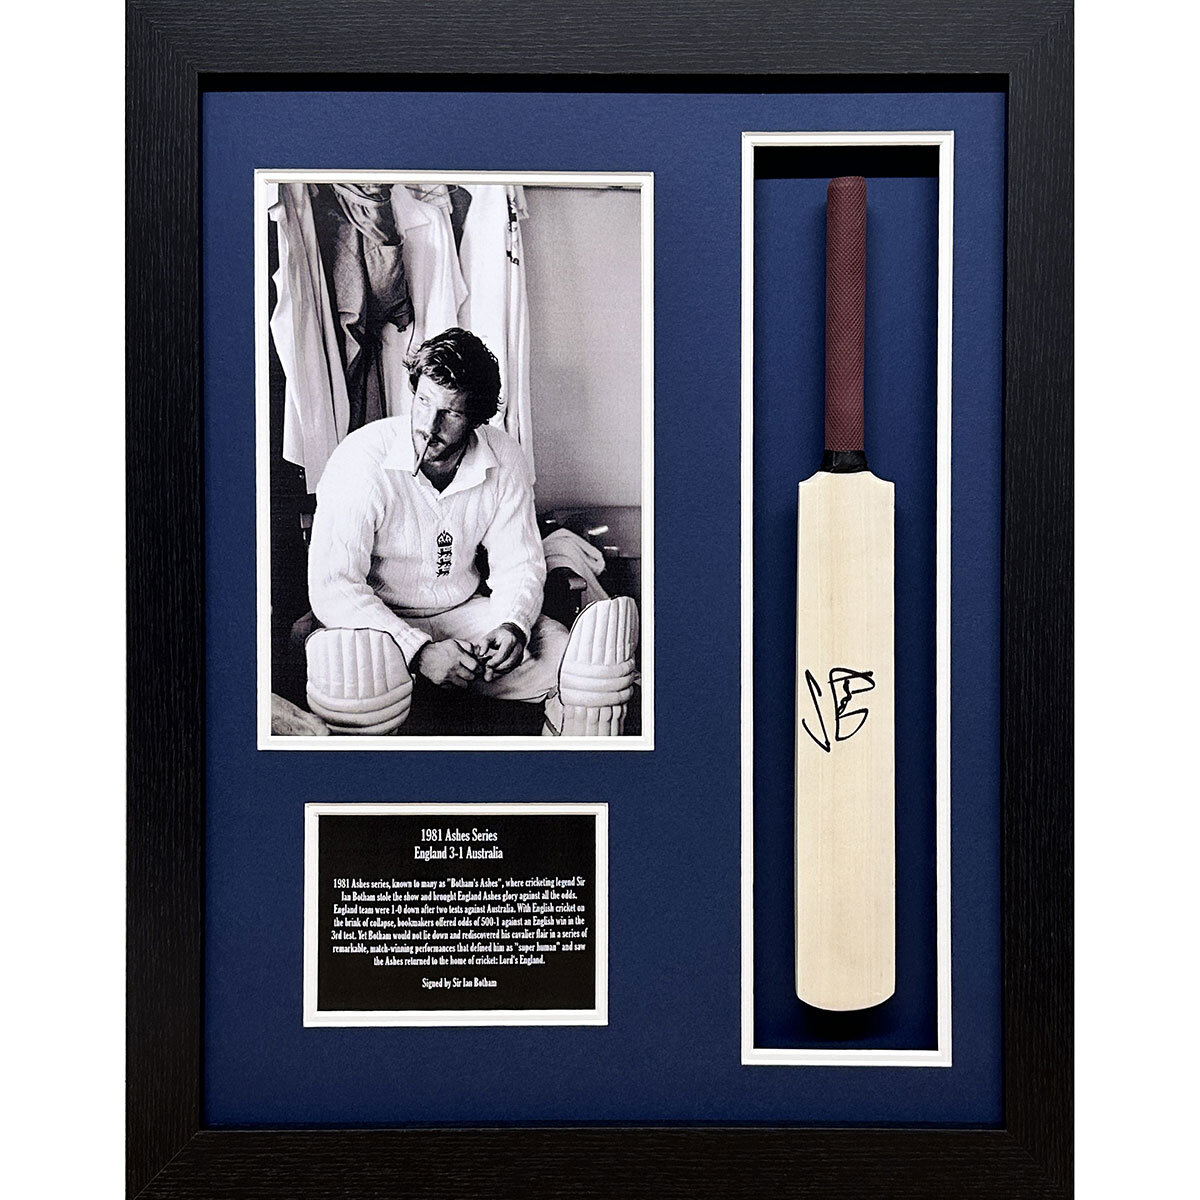 Ian Botham Signed Framed Mini Cricket Bat 